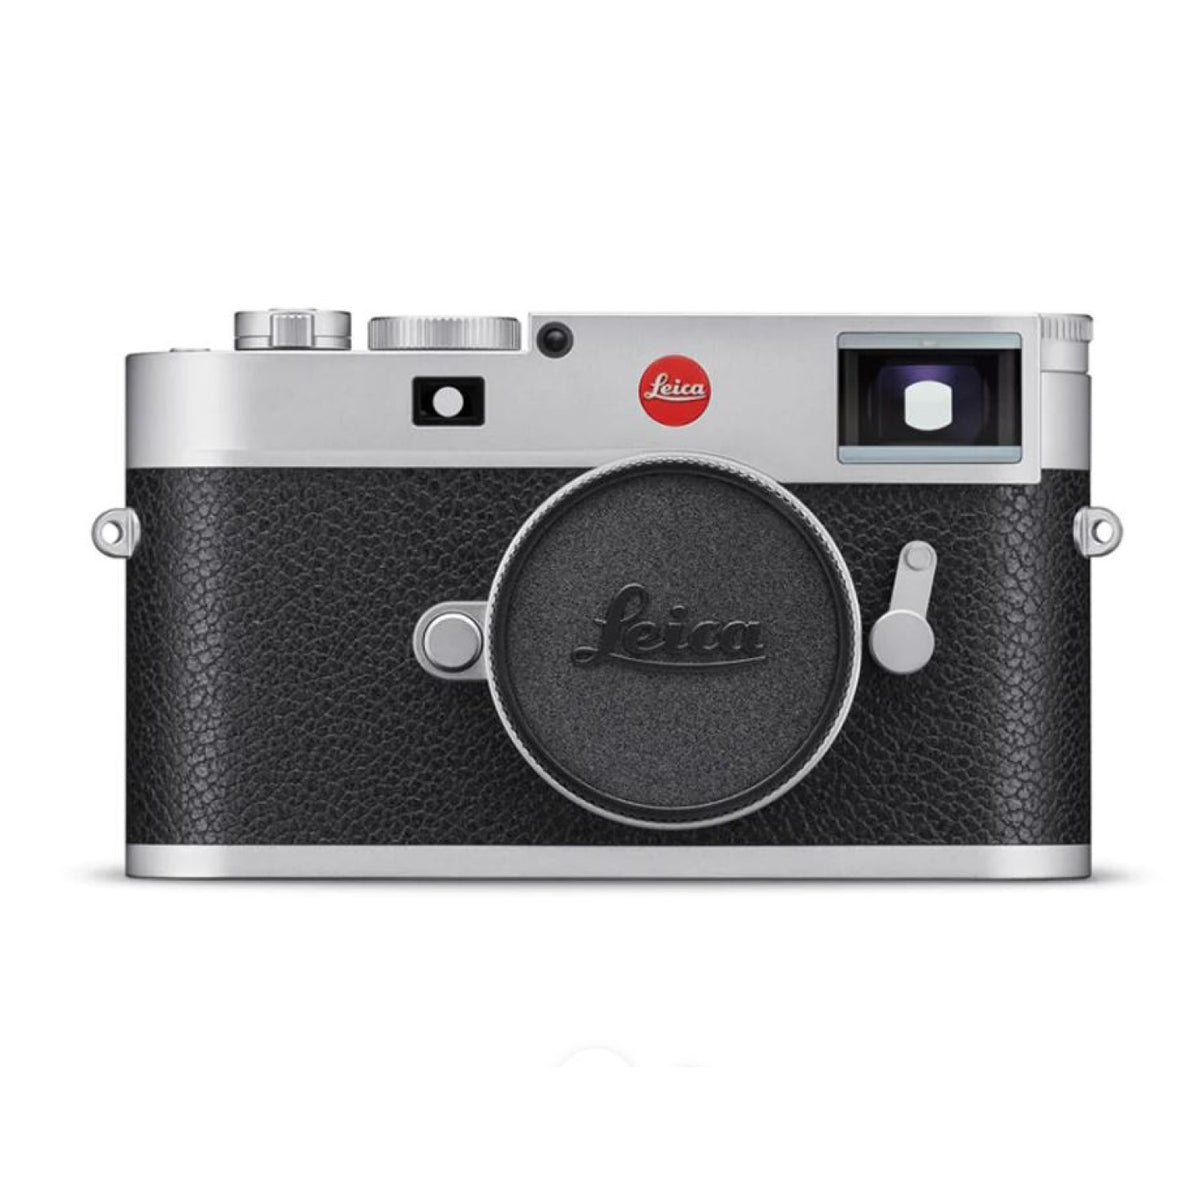 Leica Camera - M11, Silver